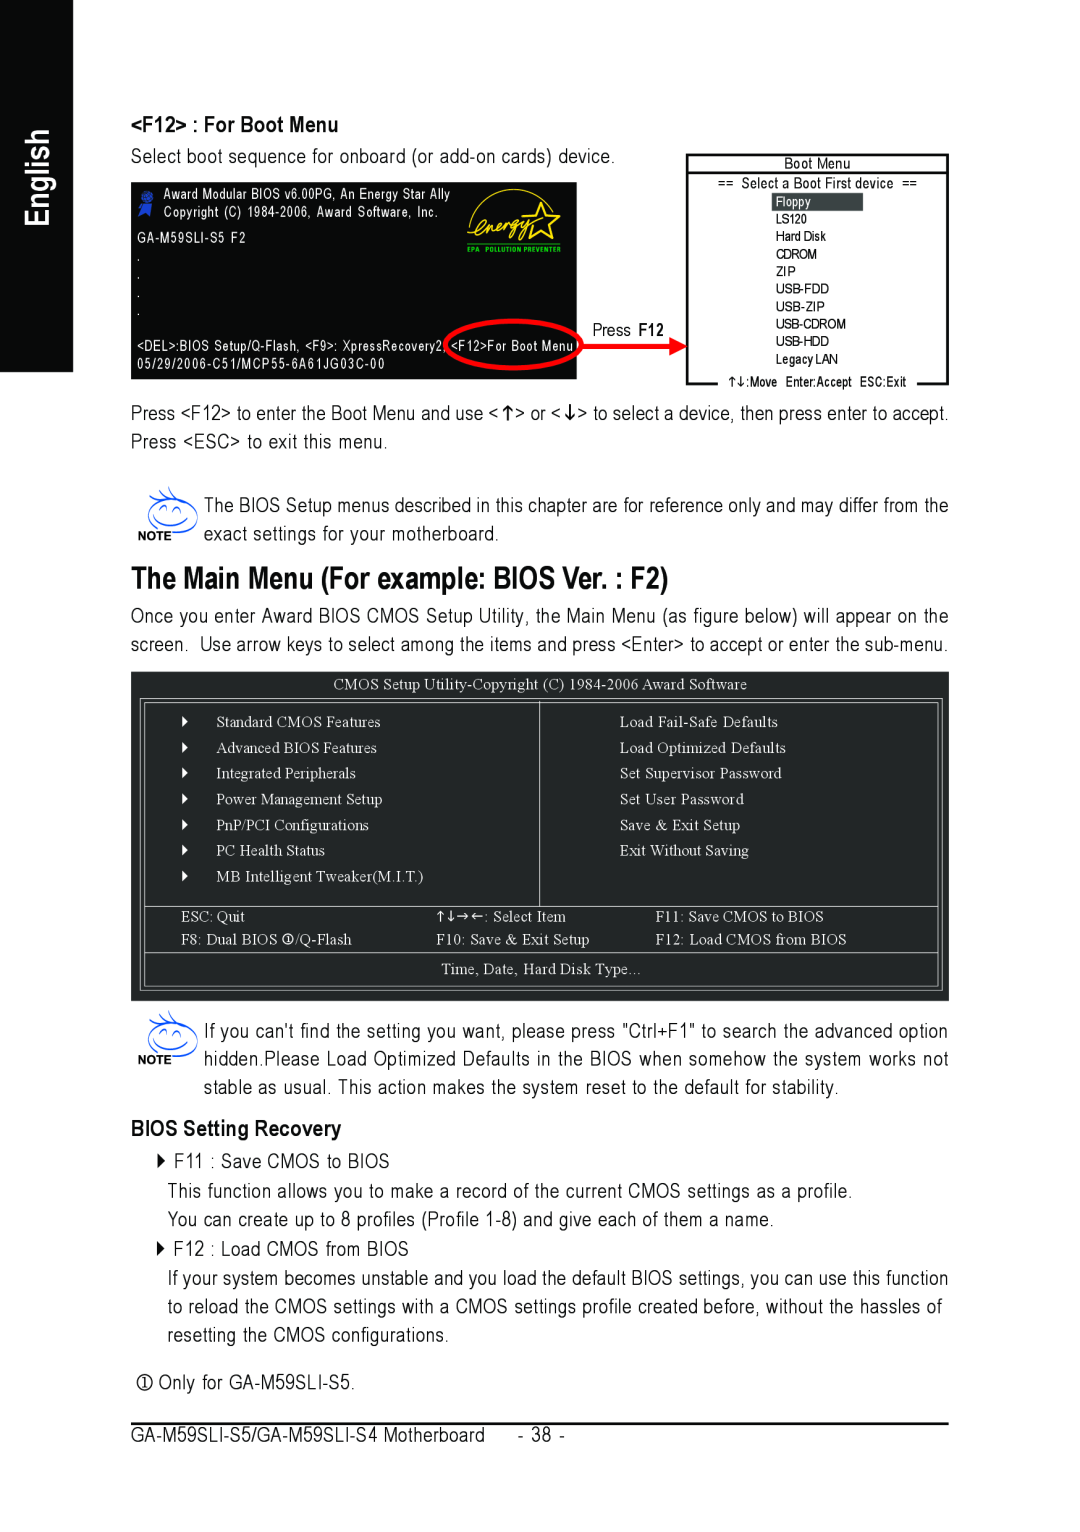 Gigabyte GA-M59SLI-S5 user manual The Main Menu For example BIOS Ver. F2, F12 For Boot Menu, BIOS Setting Recovery, English 